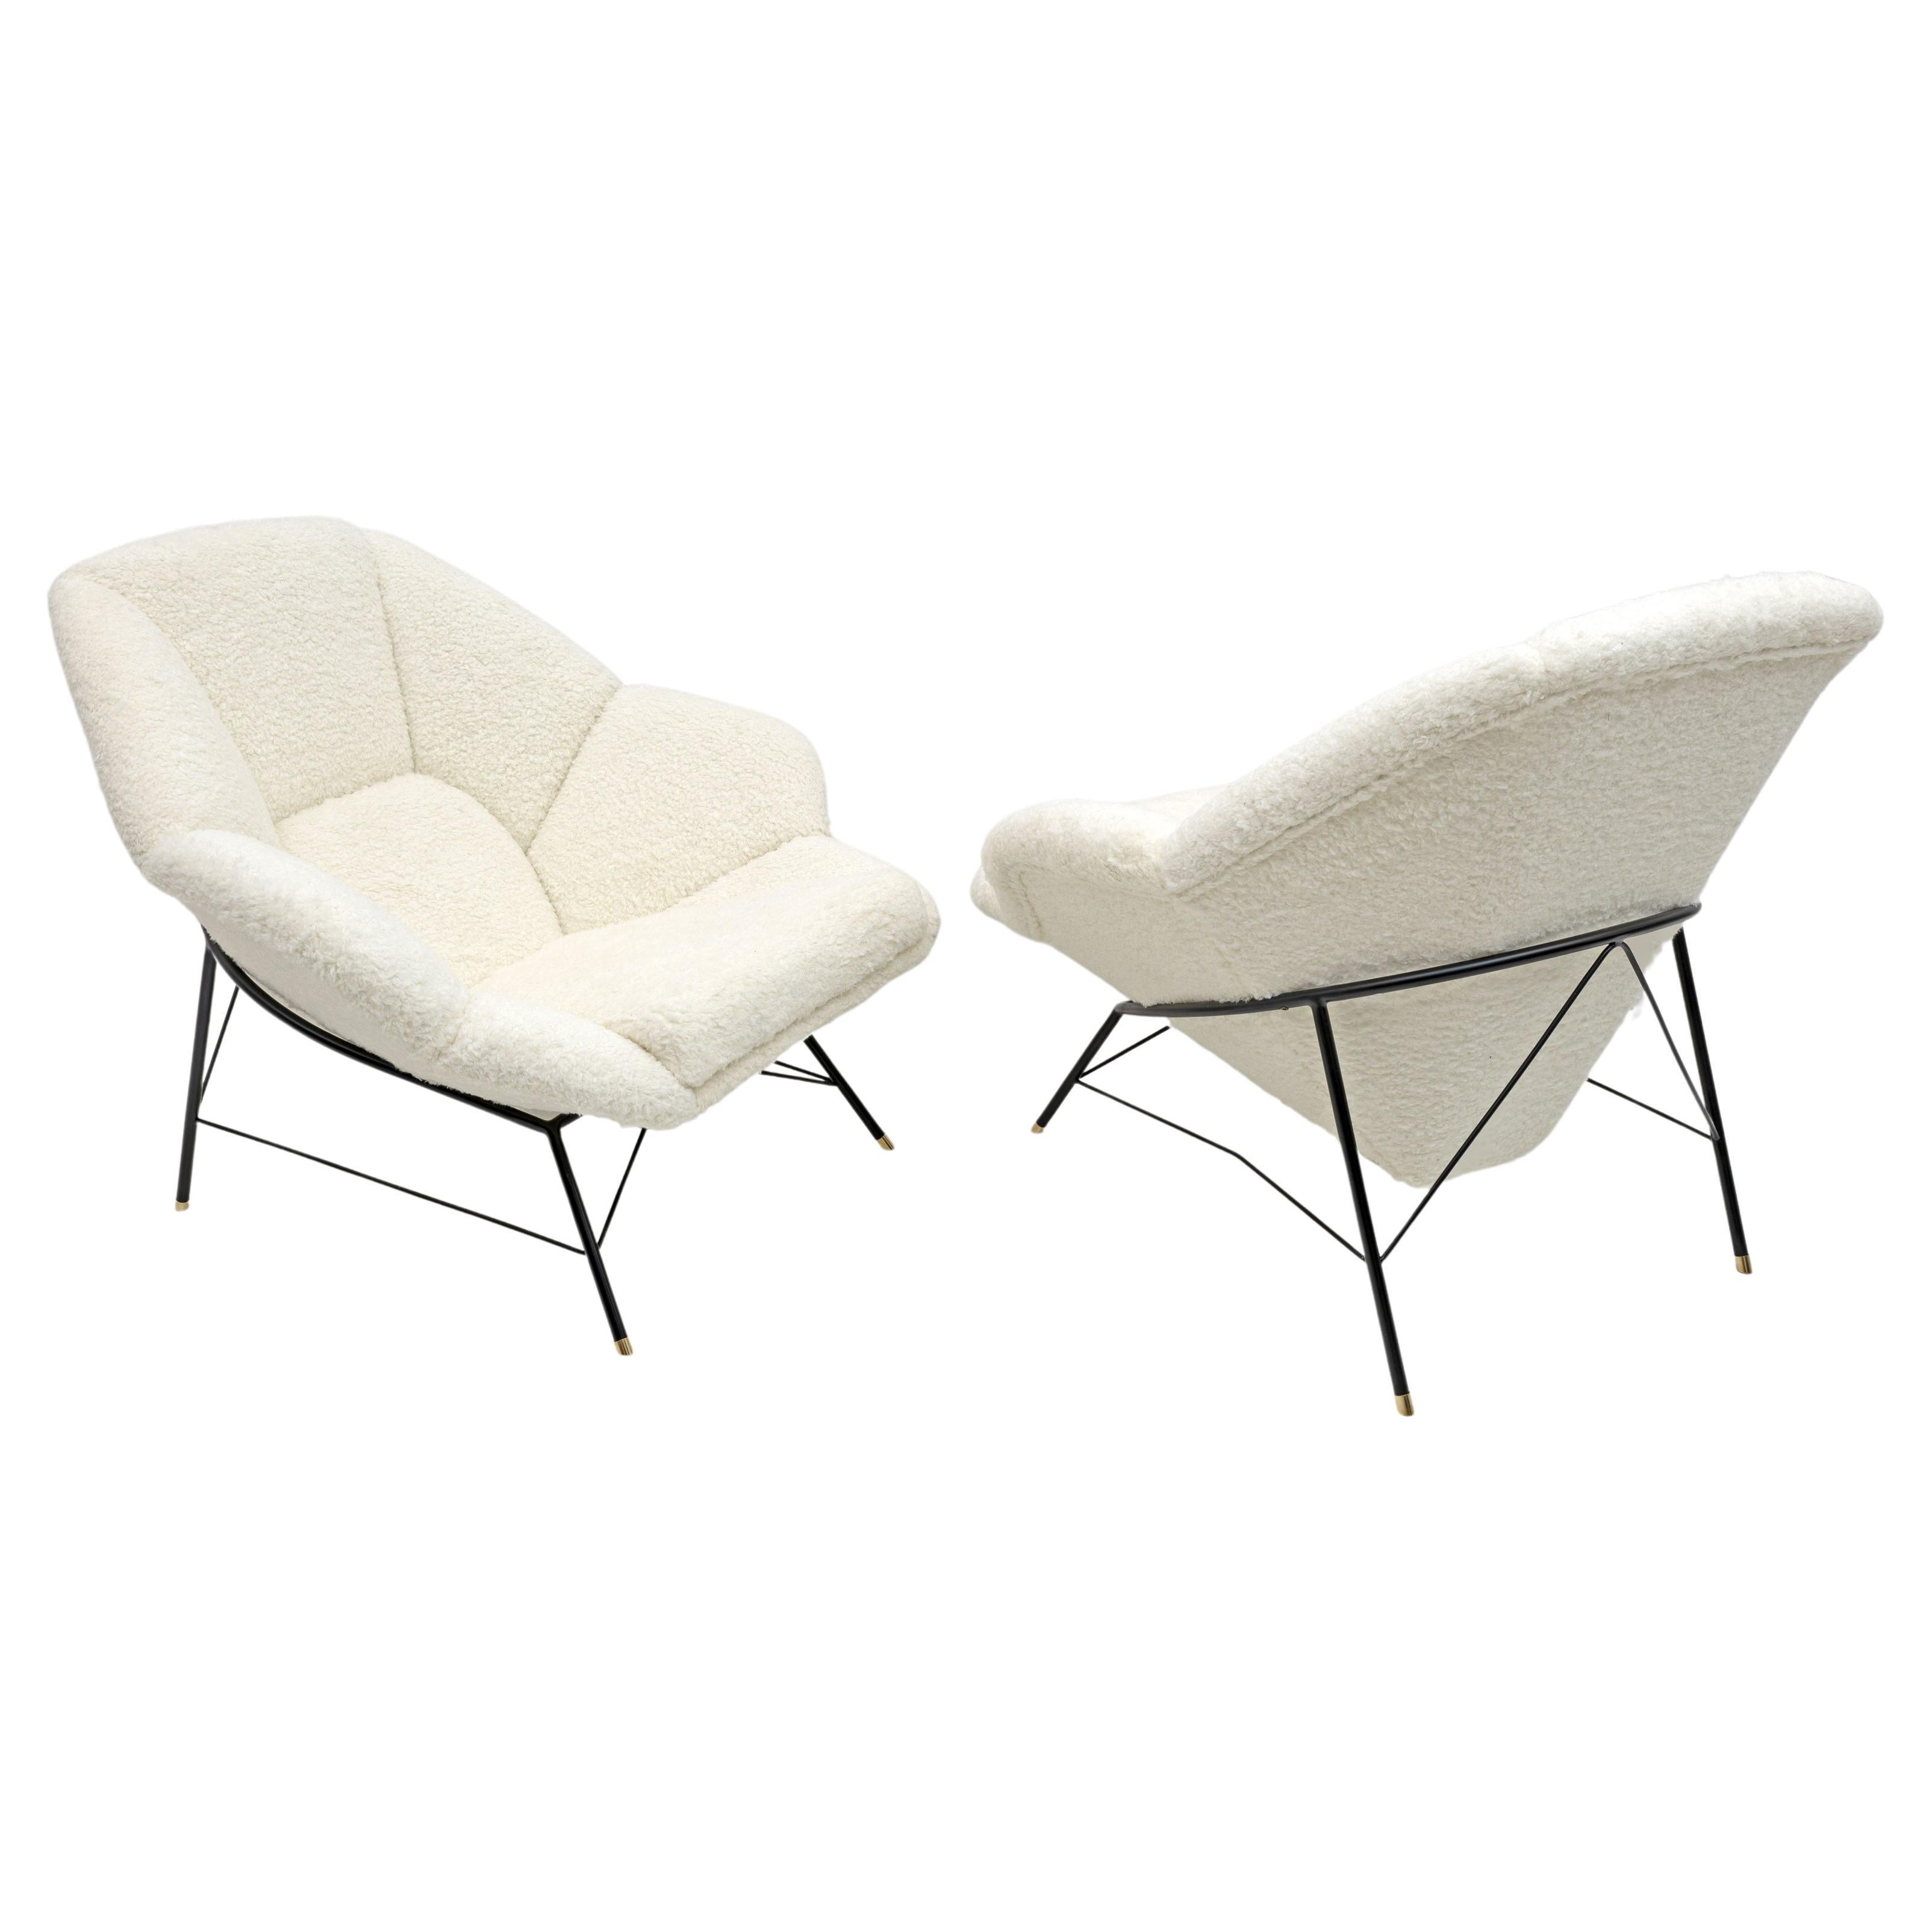 Pair of Mid-century Modern Style Italian Armchairs For Sale